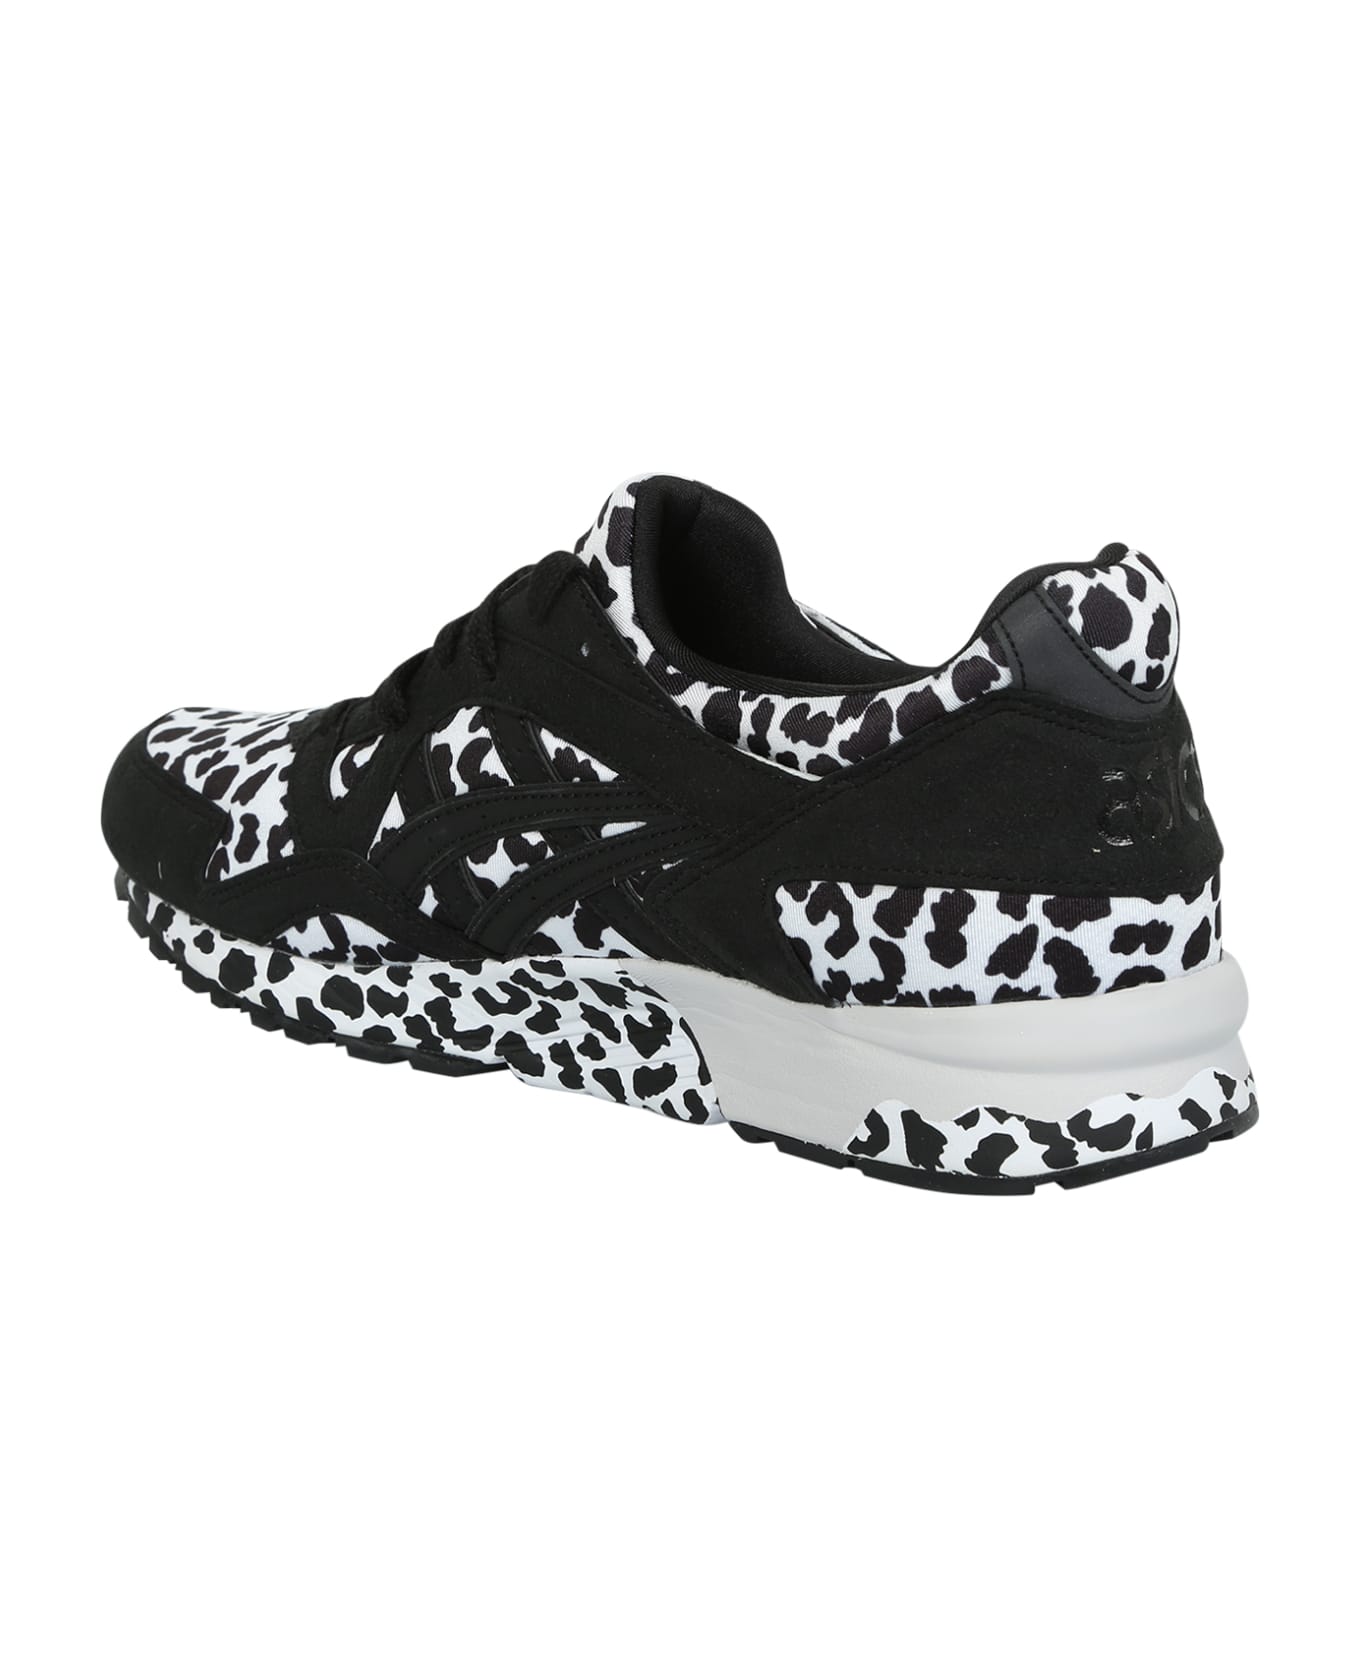 Comme des Garçons Shirt Leopard Print Asics Gel Lyte Sneakers - Black スニーカー